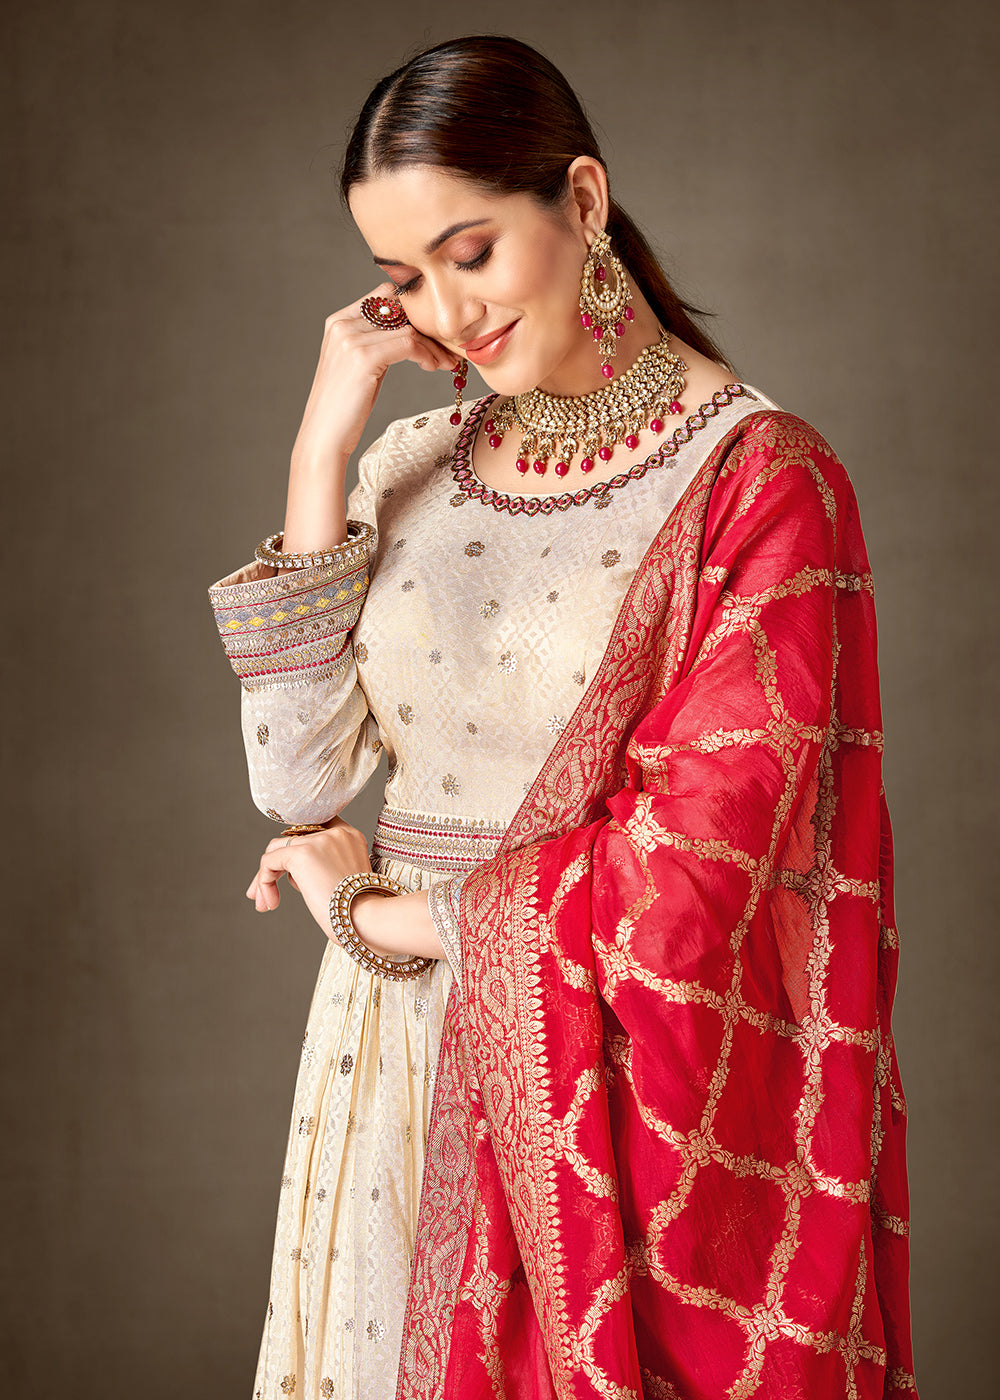 Buy Now Cream & Red Pure Silk Jacquard Slit Style Anarkali Dress Online in USA, UK, Australia, New Zealand, Canada & Worldwide at Empress Clothing.